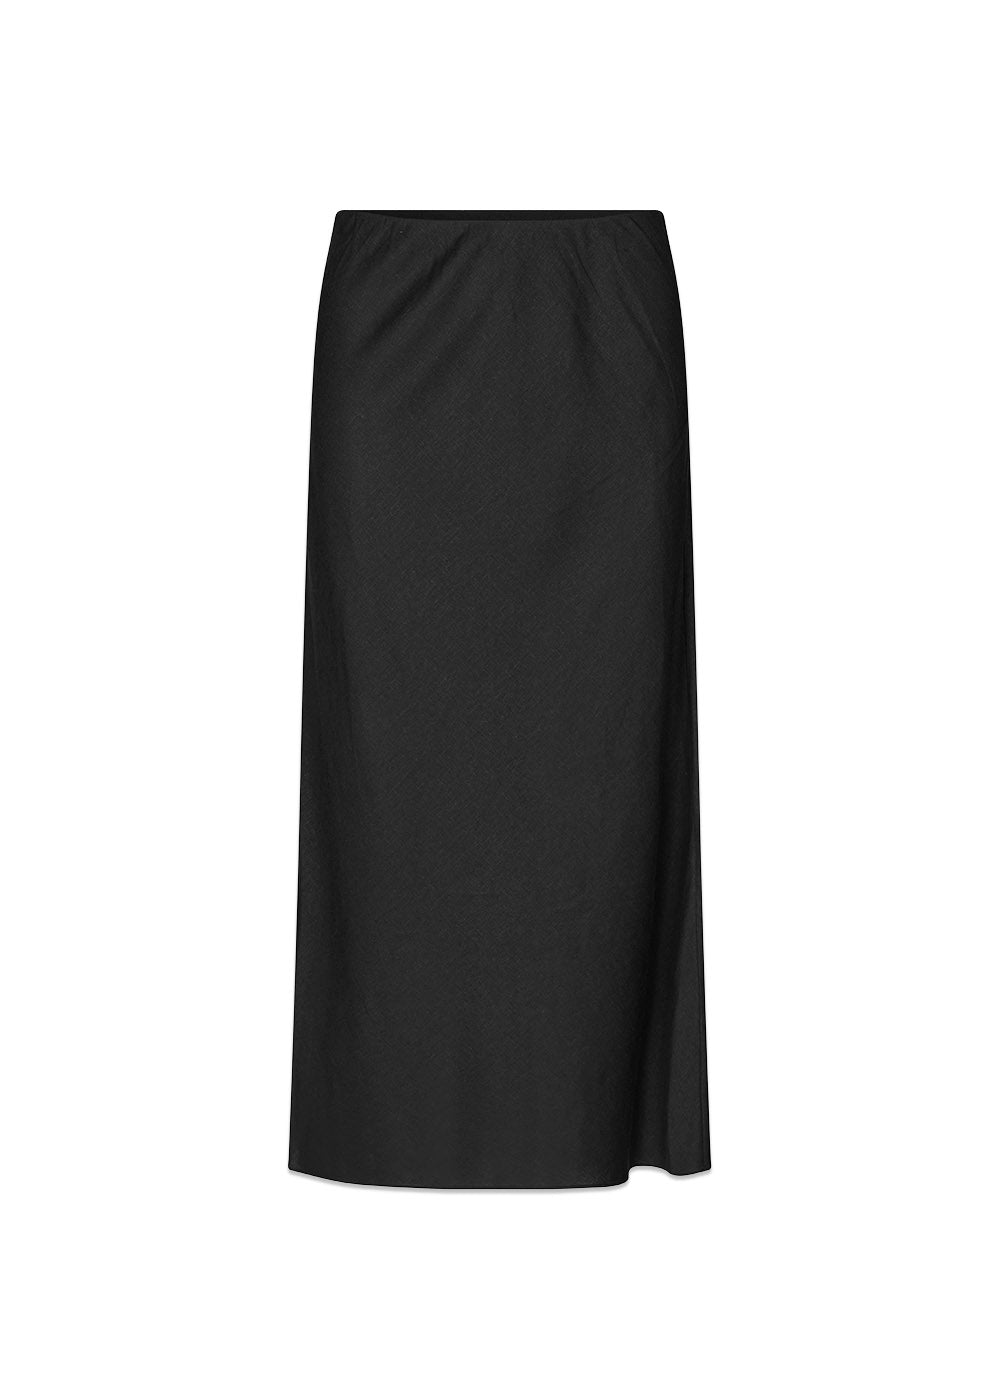 DarrelMD skirt - Black